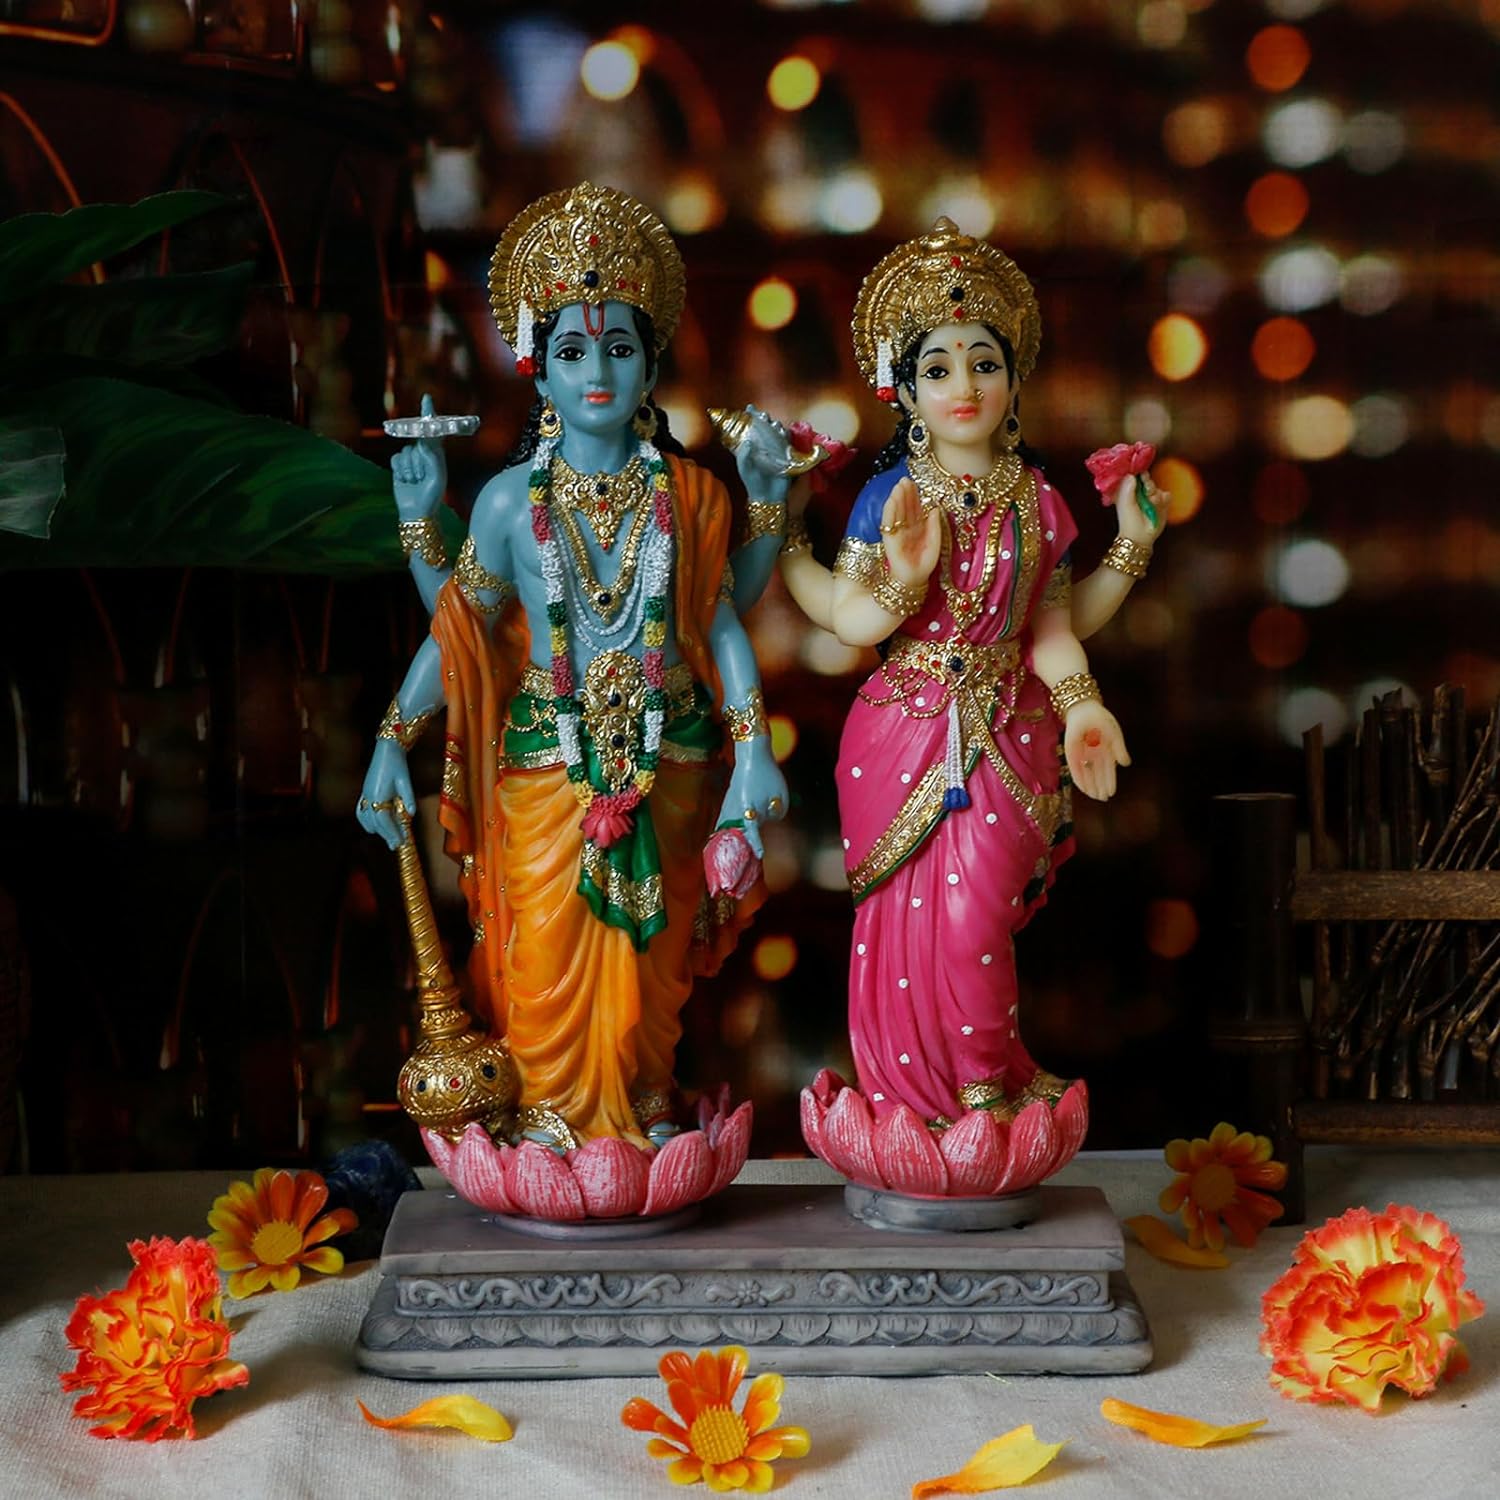 Hindu God Lakshmi Narayan Statue - 8.8” H Laxmi Narayan Sculpture Indian Diwali Pooja Item Murti Gifts for Indian Couple Friends Family Diwali Gifts Home Office Mandir Temple Puja Decor